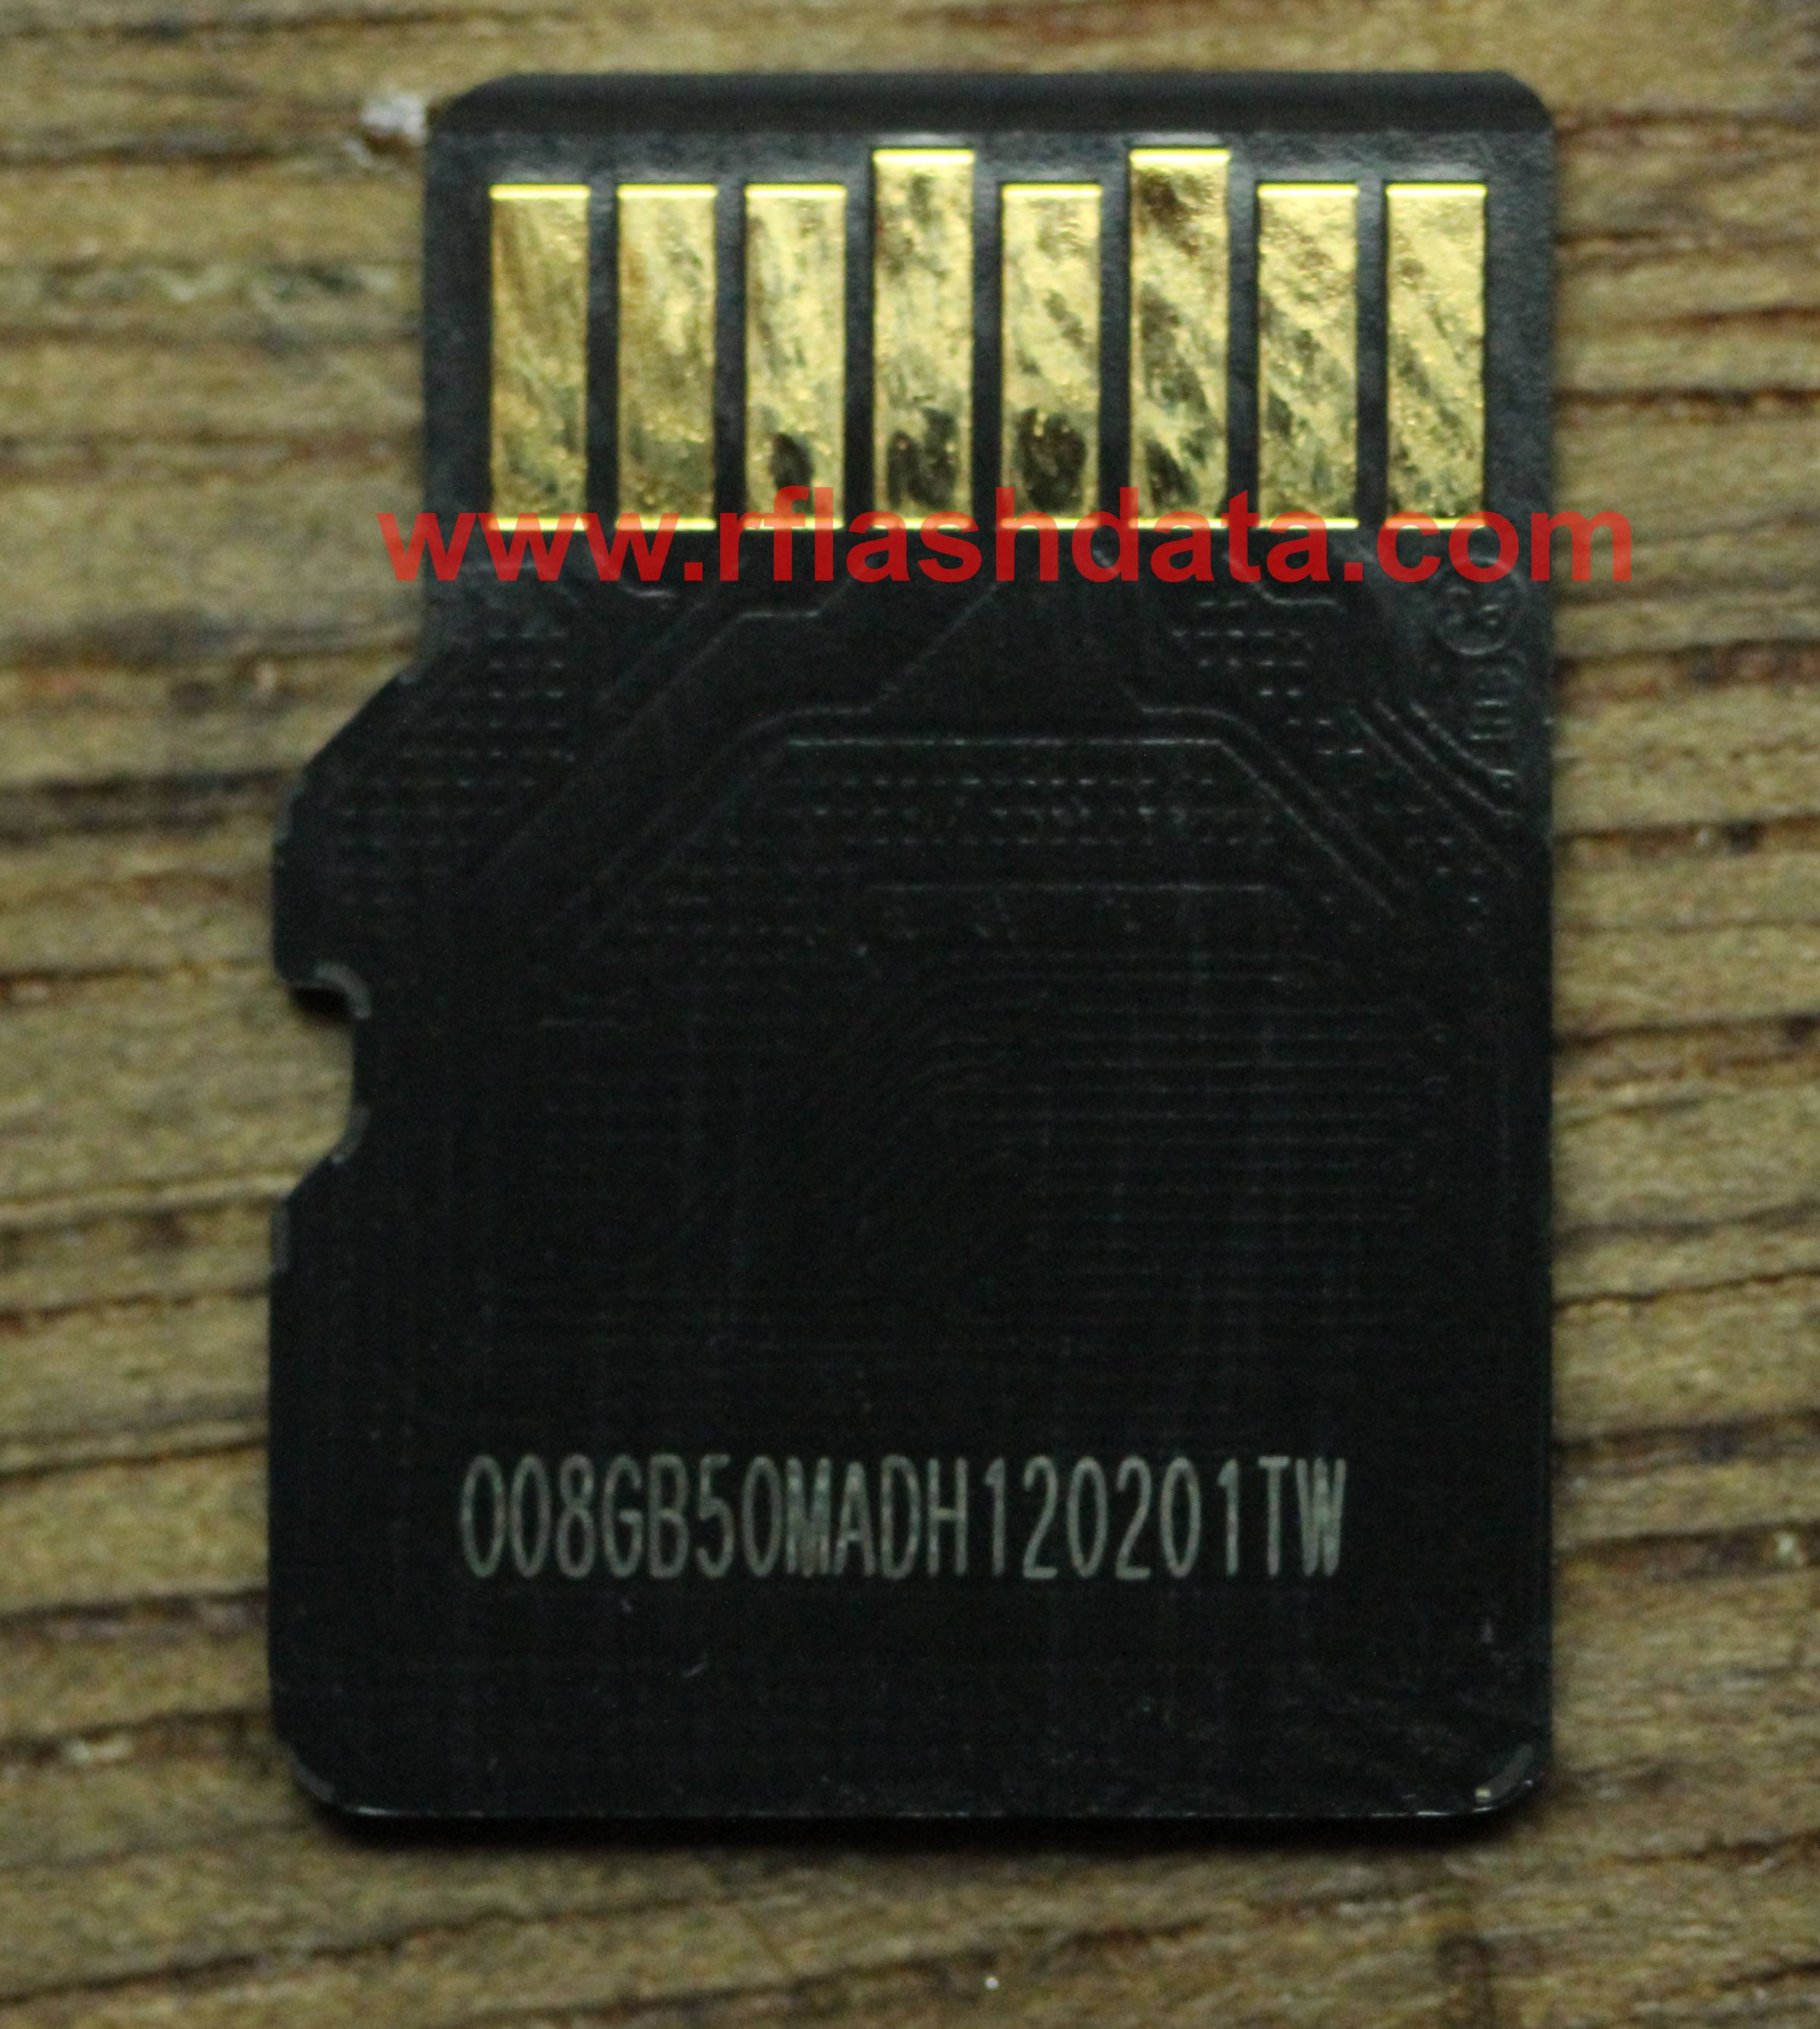 008GB50MADH120201TW microSD  memory card data recovery